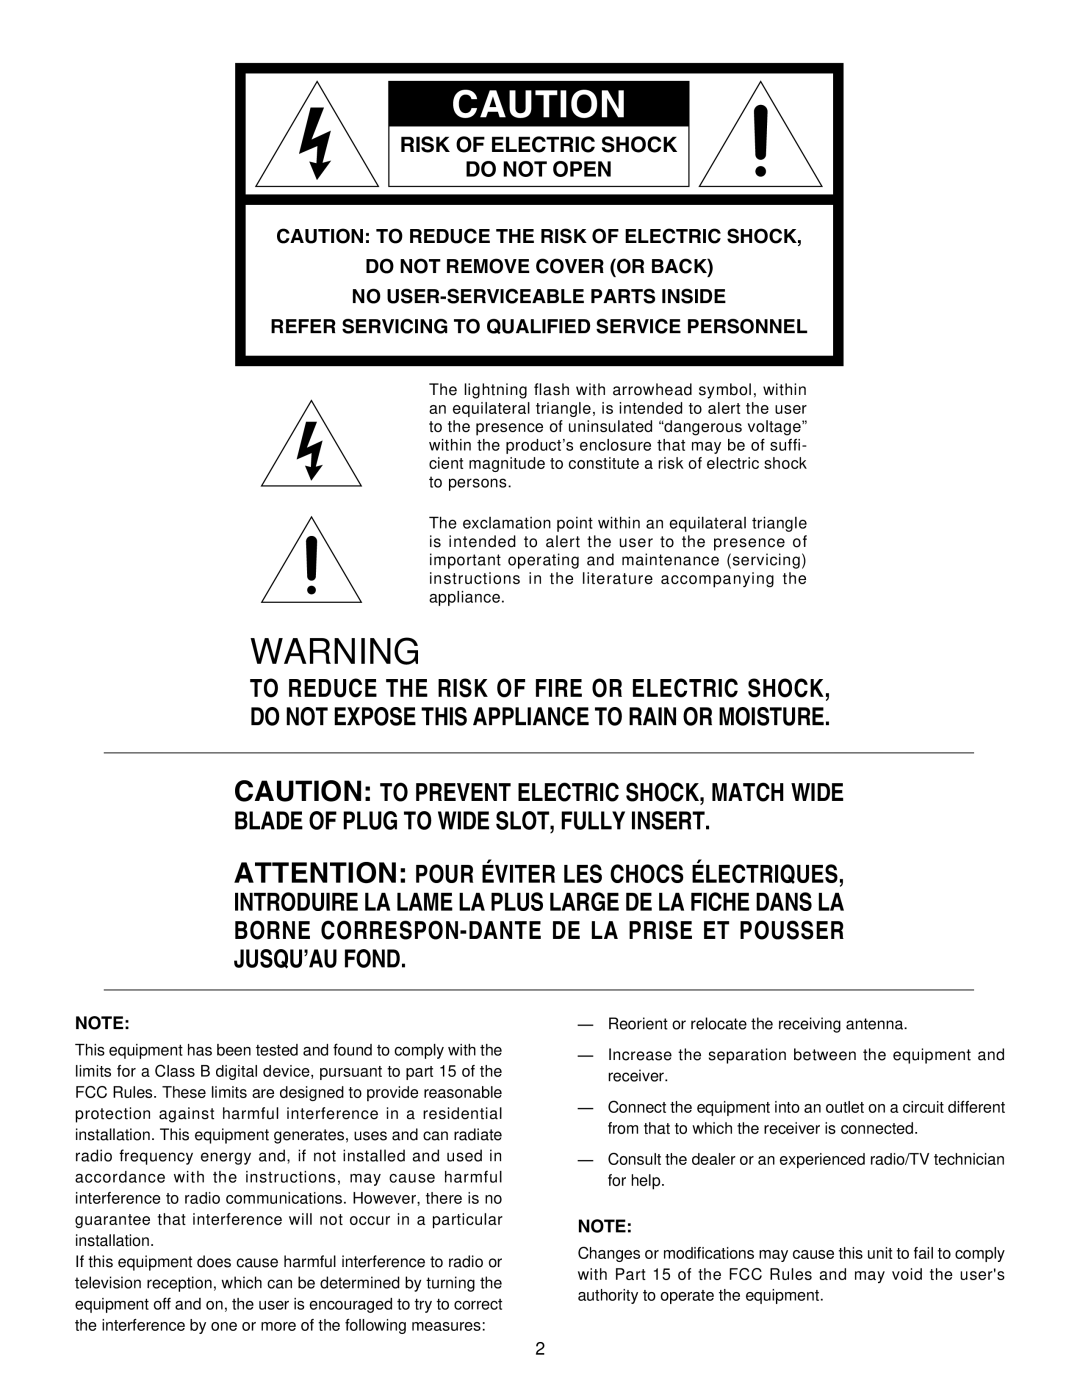 Marantz PMD520 manual Risk of Electric Shock Do not Open 